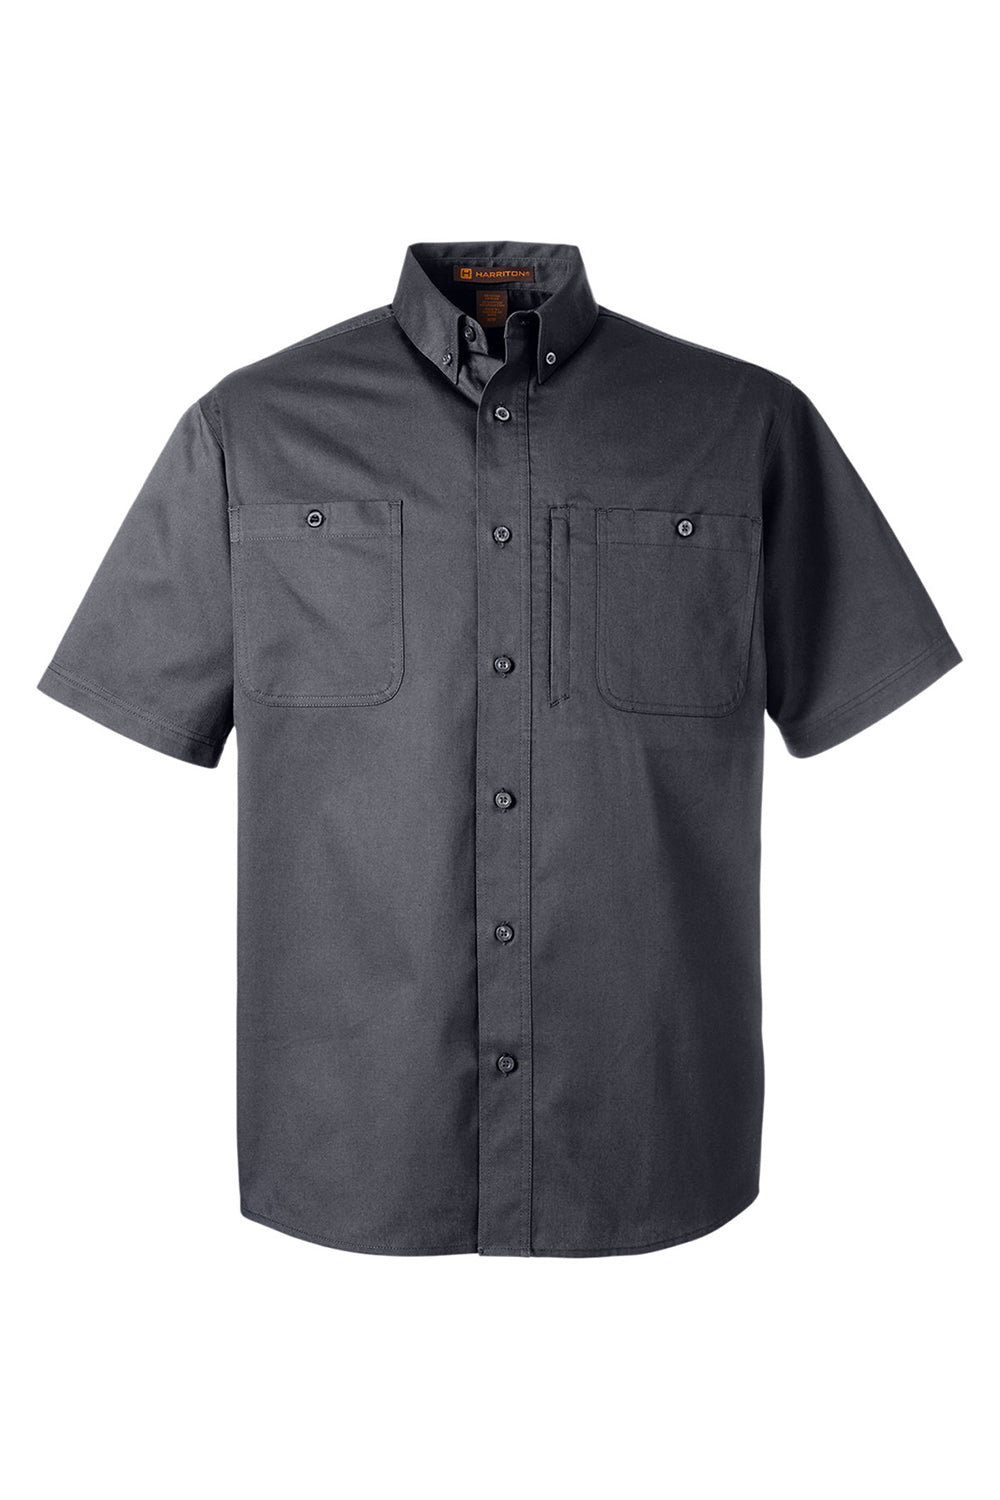 Harriton M585 Mens Advantage Short Sleeve Button Down Shirt w/ Double Pockets Dark Charcoal Grey Flat Front